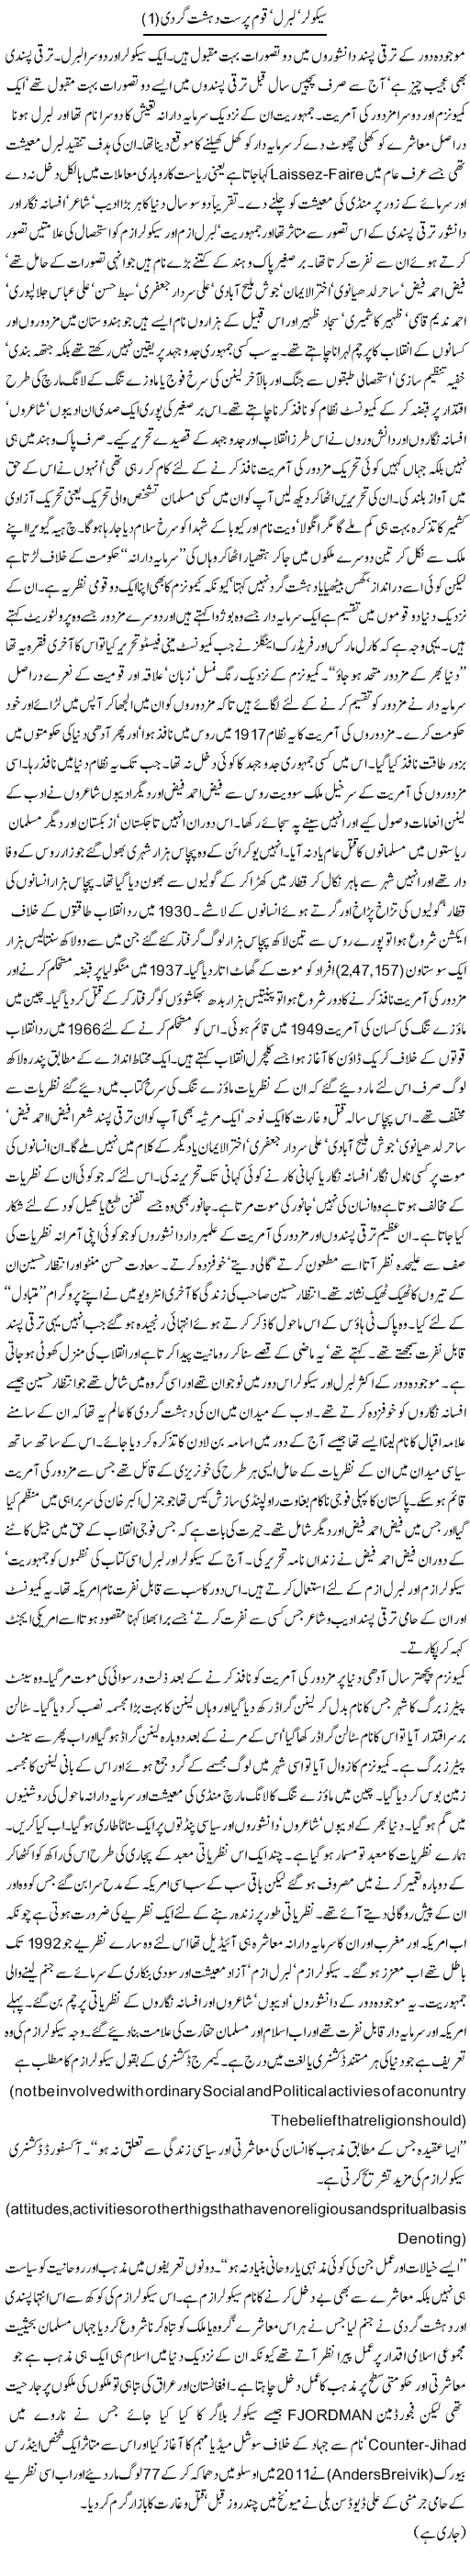 Secular, Liberal, Qoum Parast Dehshat Gardi (1) | Orya Maqbool Jan | Daily Urdu Columns